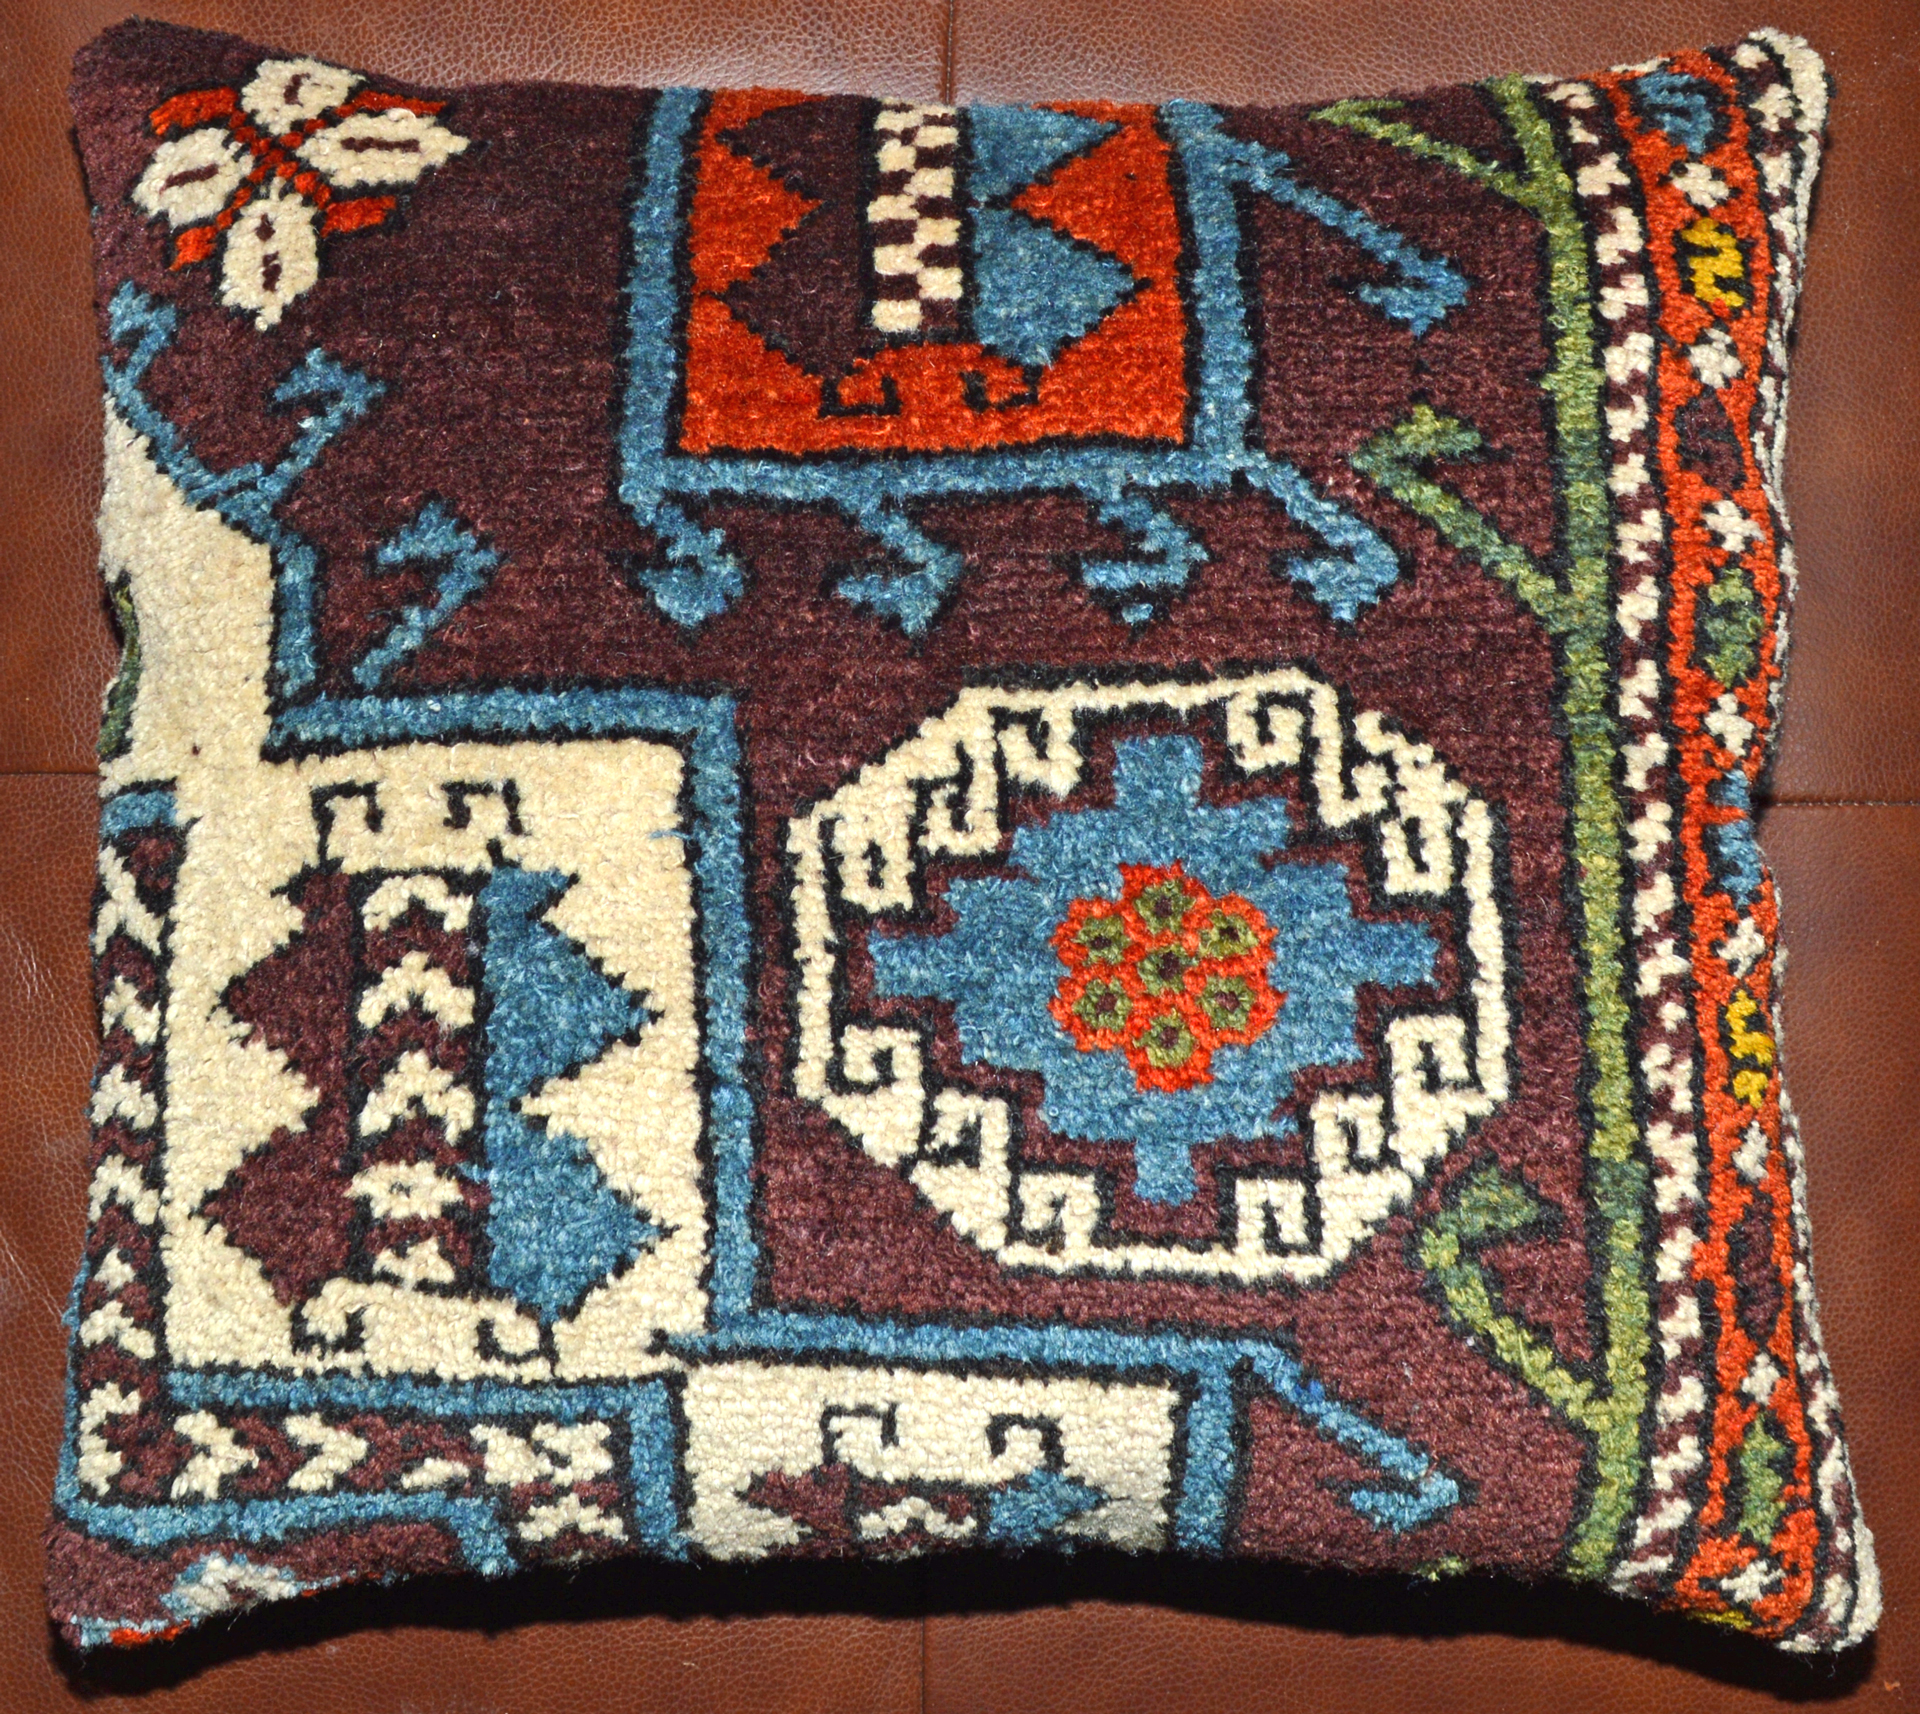 Antique Turkish rug pillow, Douglas Stock Gallery, antique rugs Boston,MA area, antique rug pillows, antique Oriental rug cushions